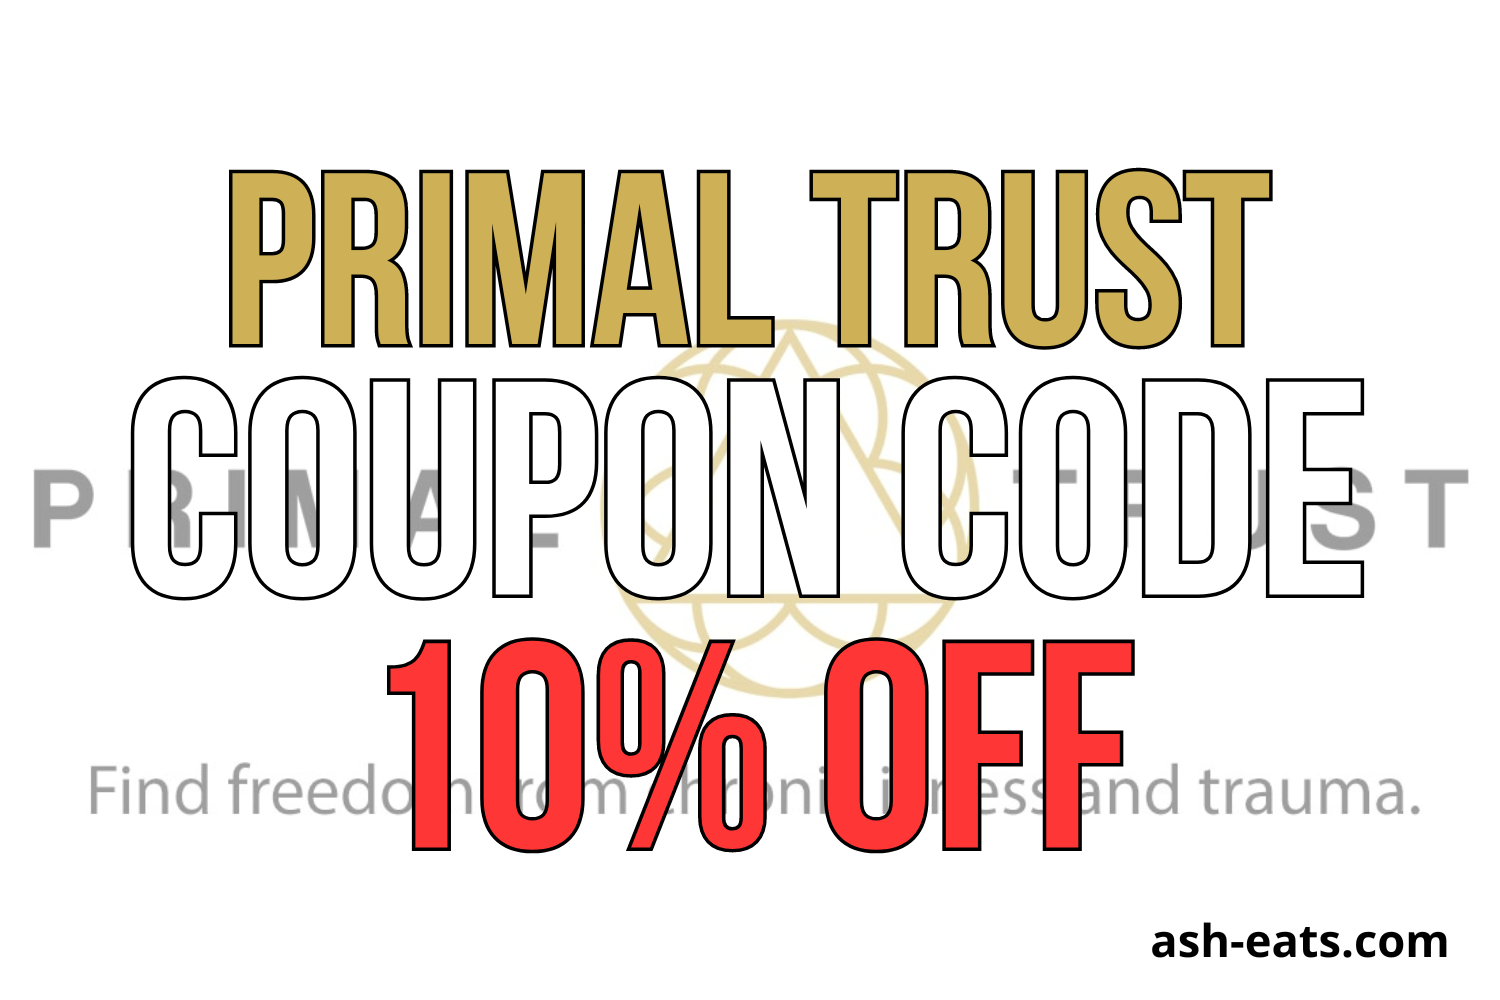 primal trust coupon code